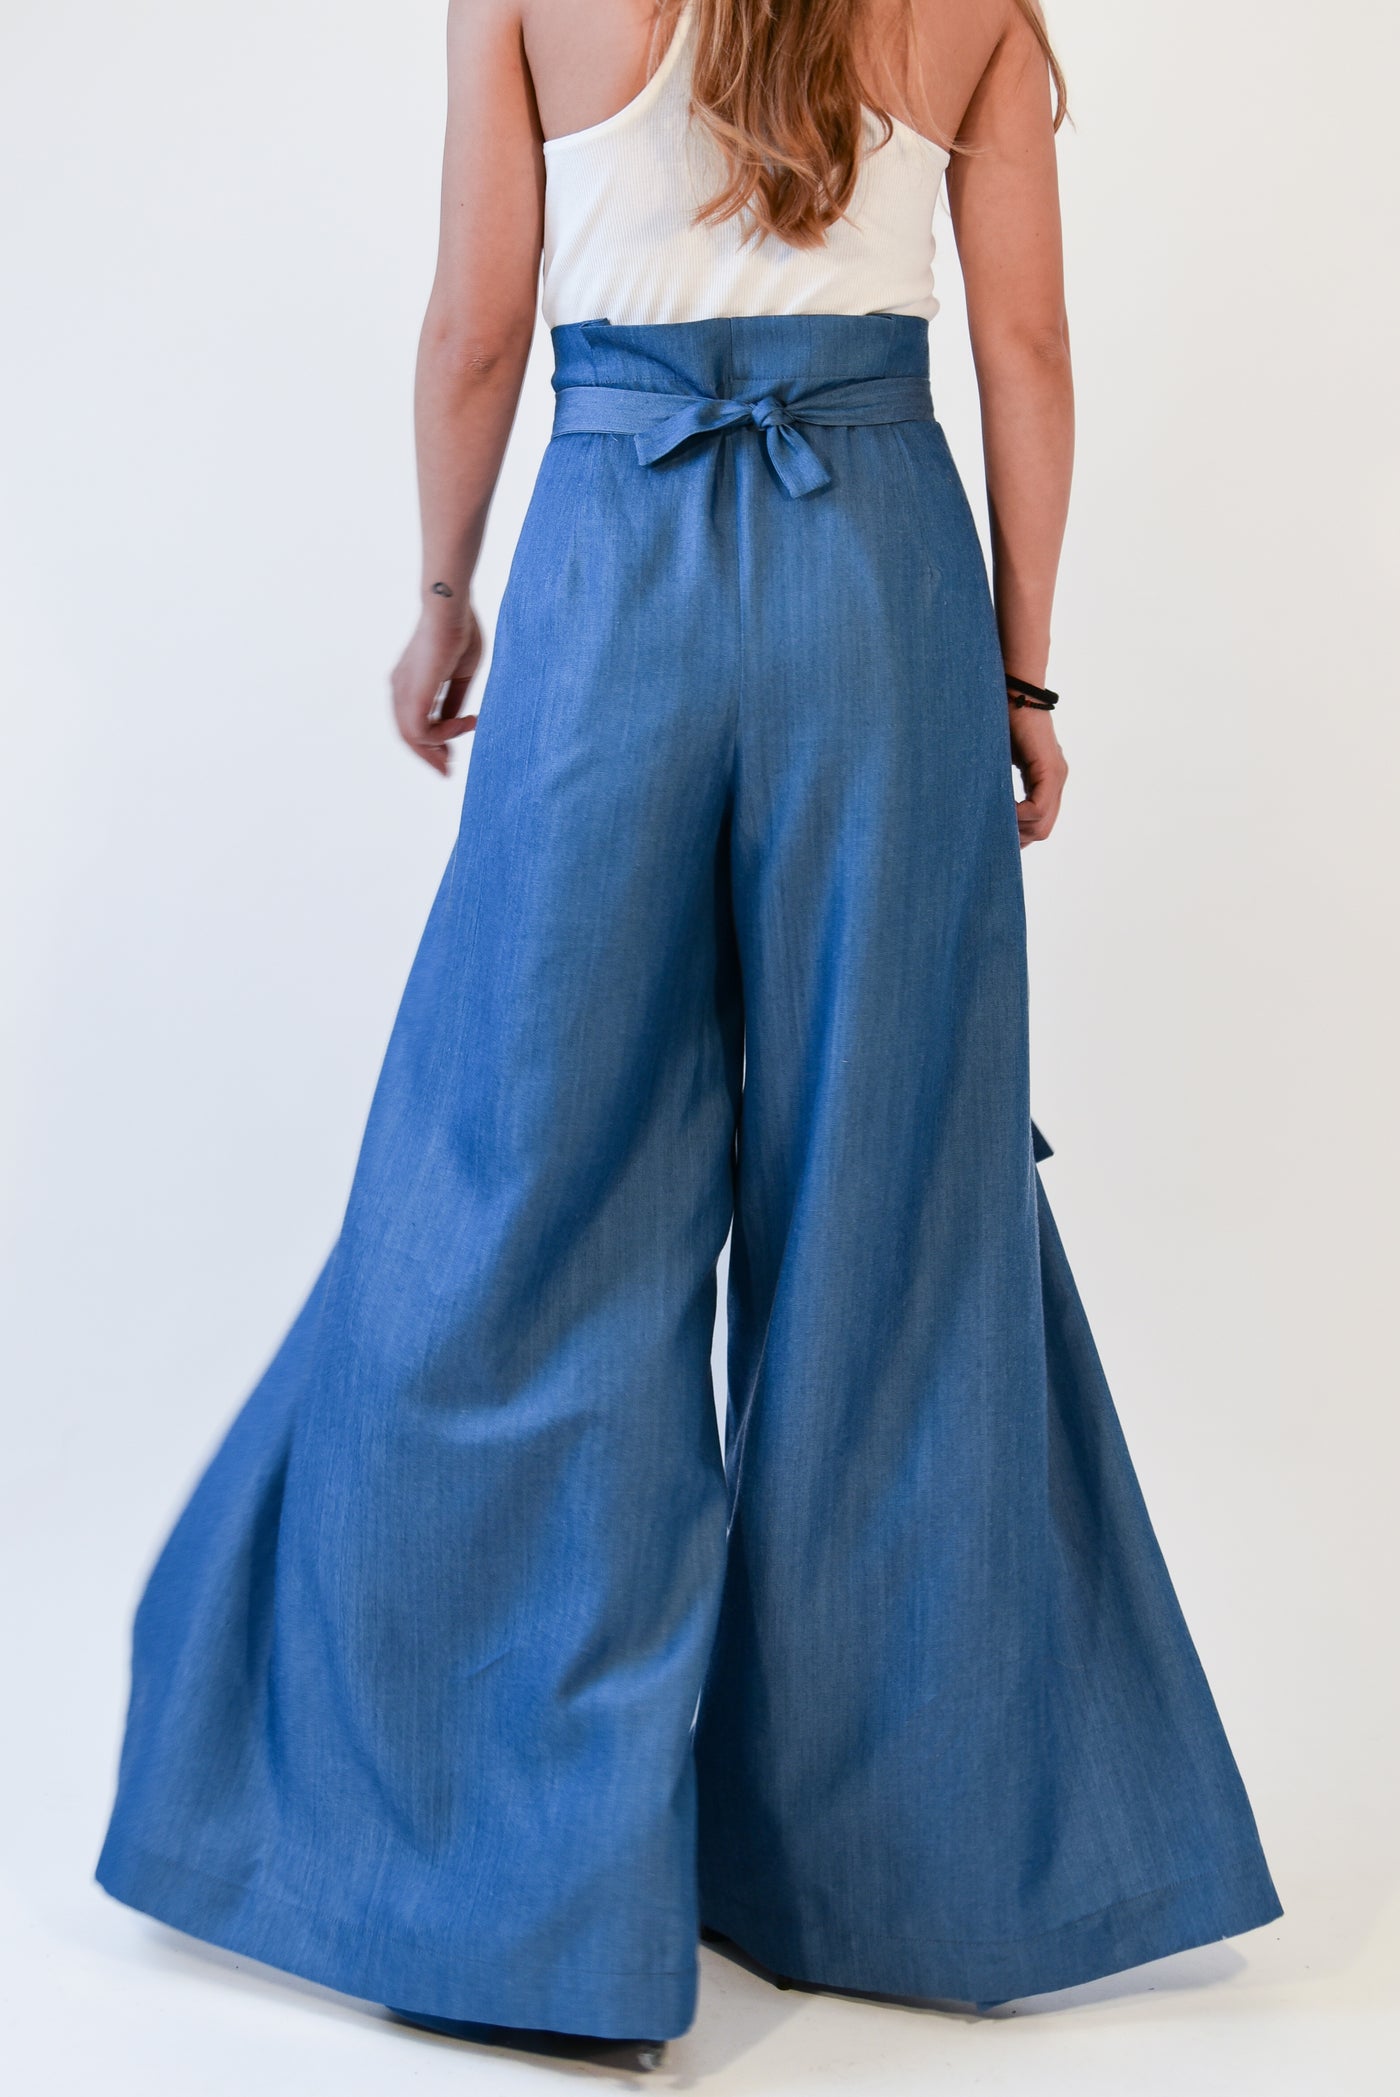 Blue wide leg pants skirt F2113